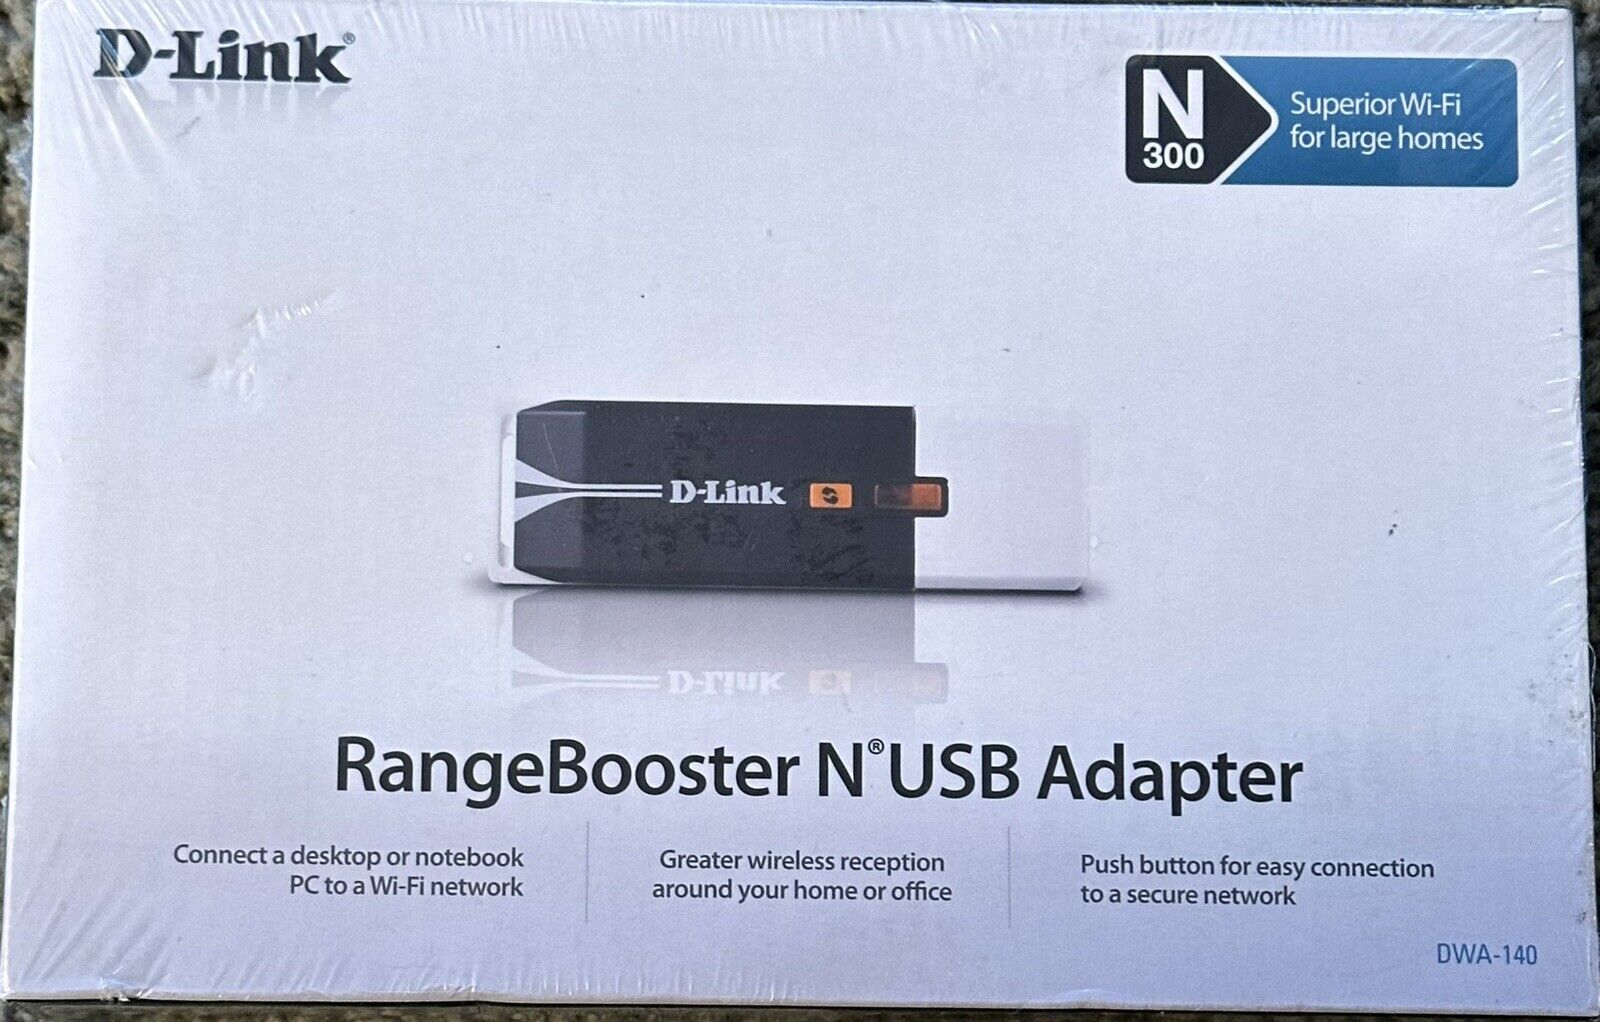 D-Link RangeBooster N USB Adapter DWA-140 Wireless N-300 Greater Reception New